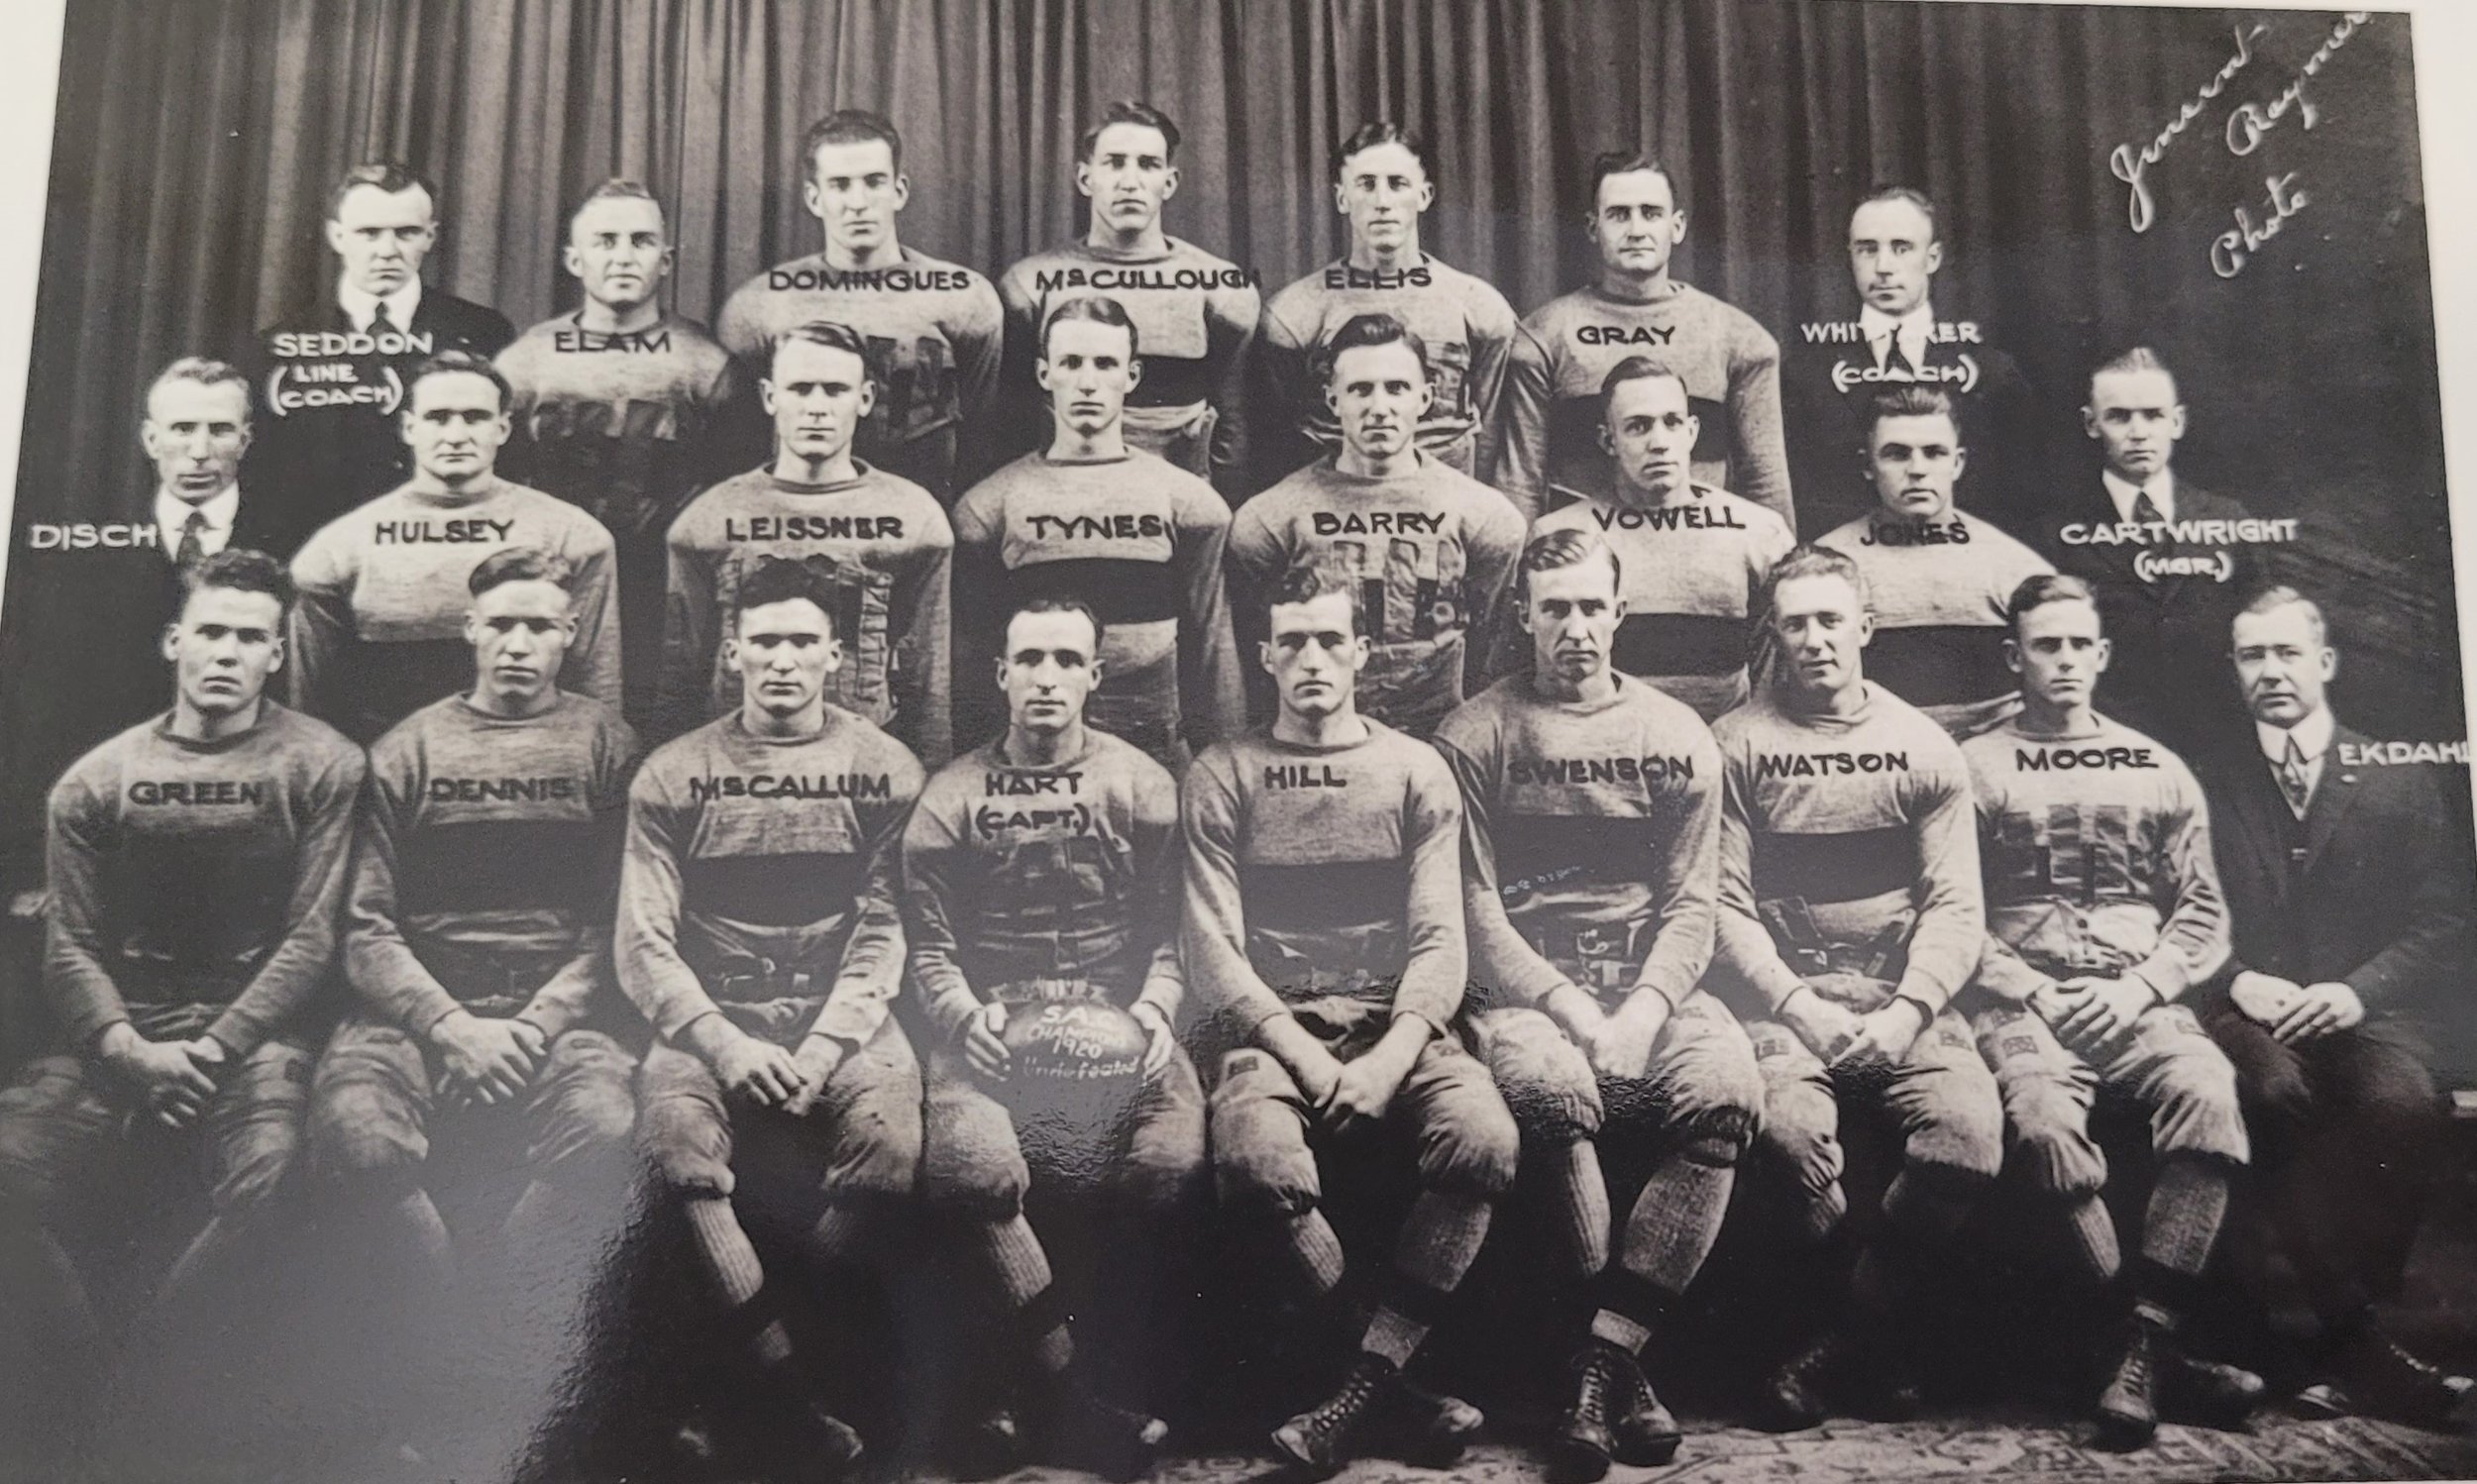 1920 football team photo.jpg